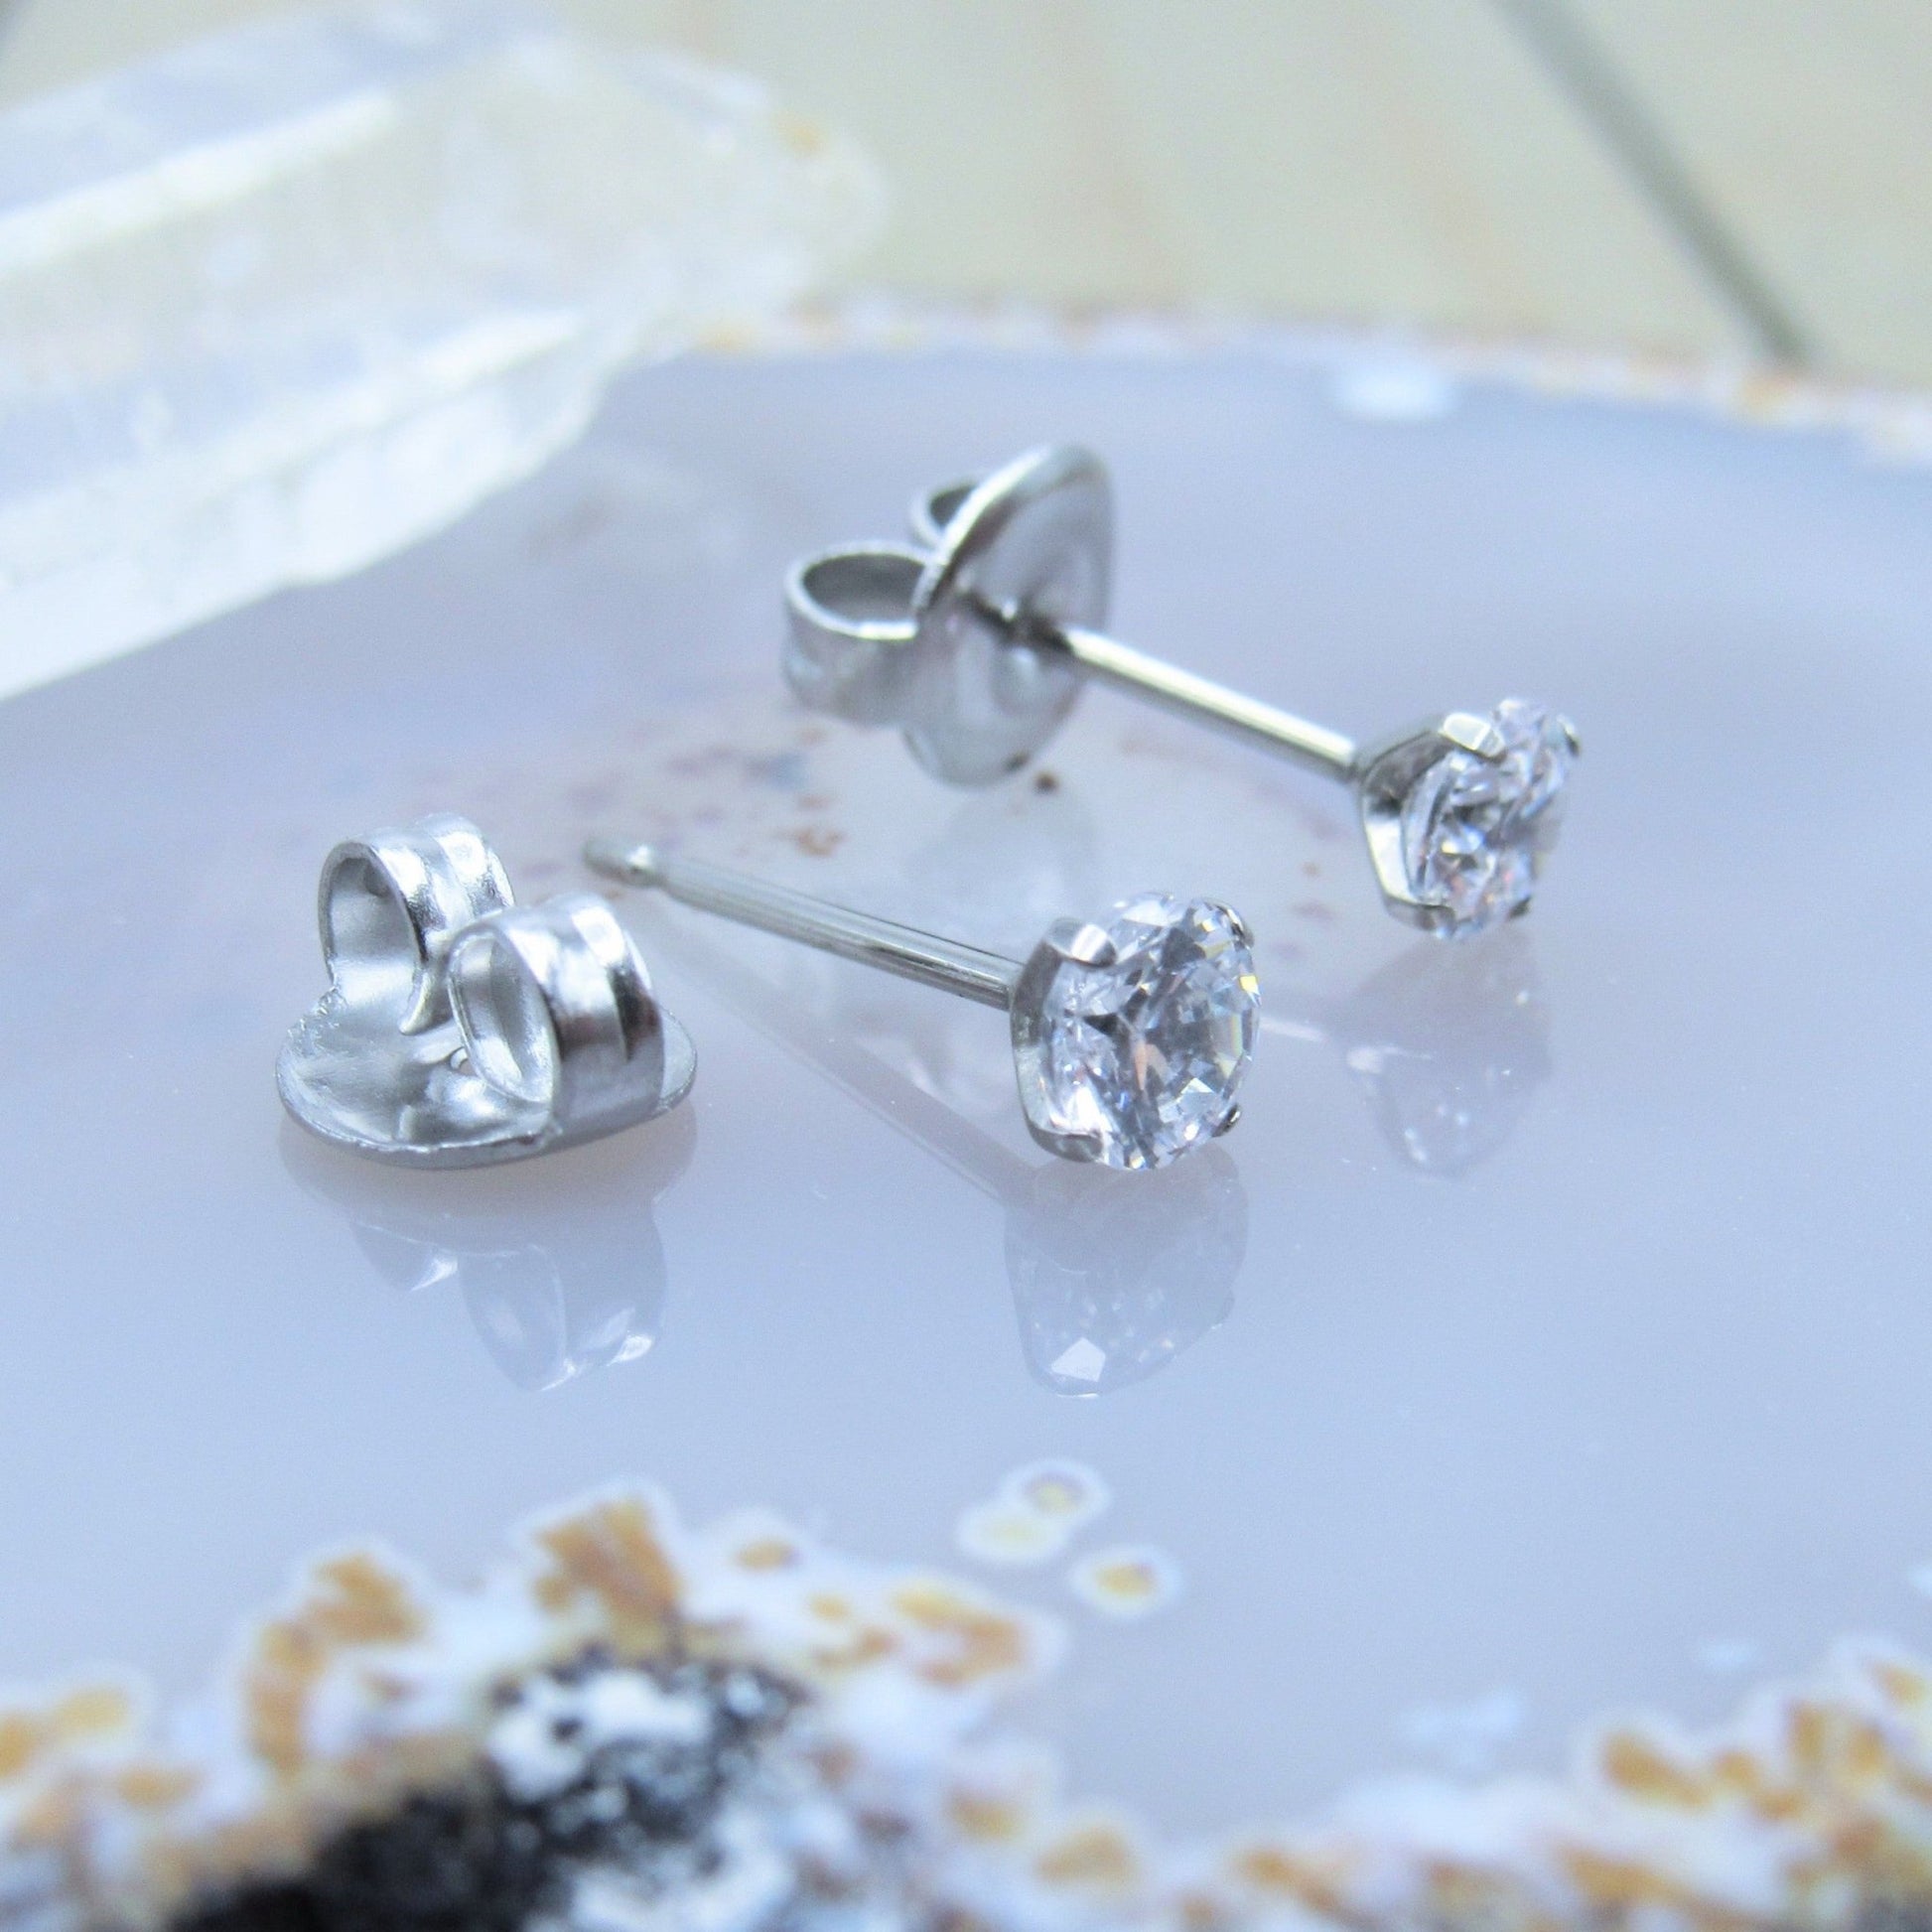 4-Pairs Screw Earring Backs for Diamond Stud Earrings, Stering